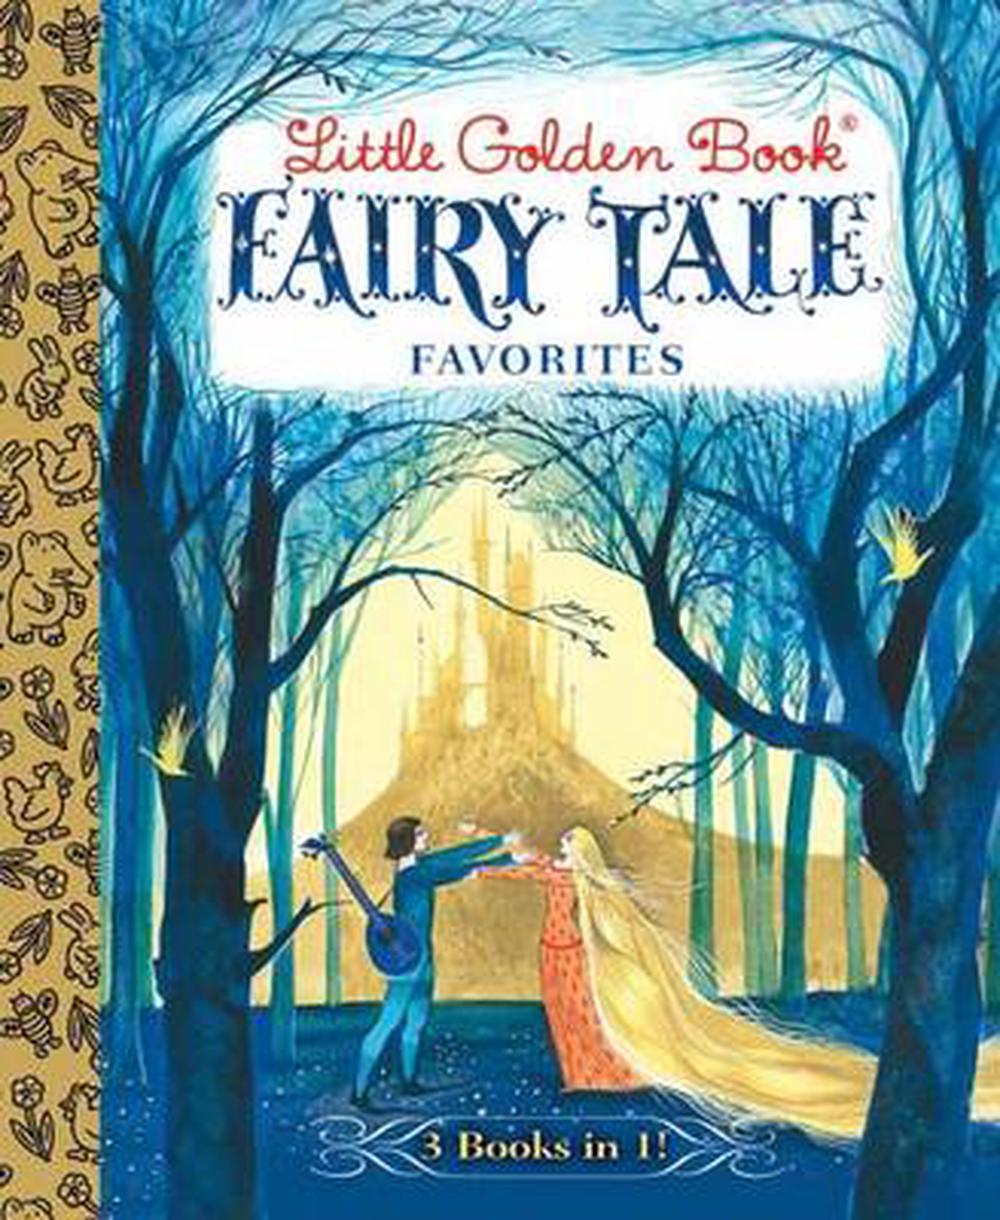 Little Golden Book Fairy Tale Favorites by Hans Christian